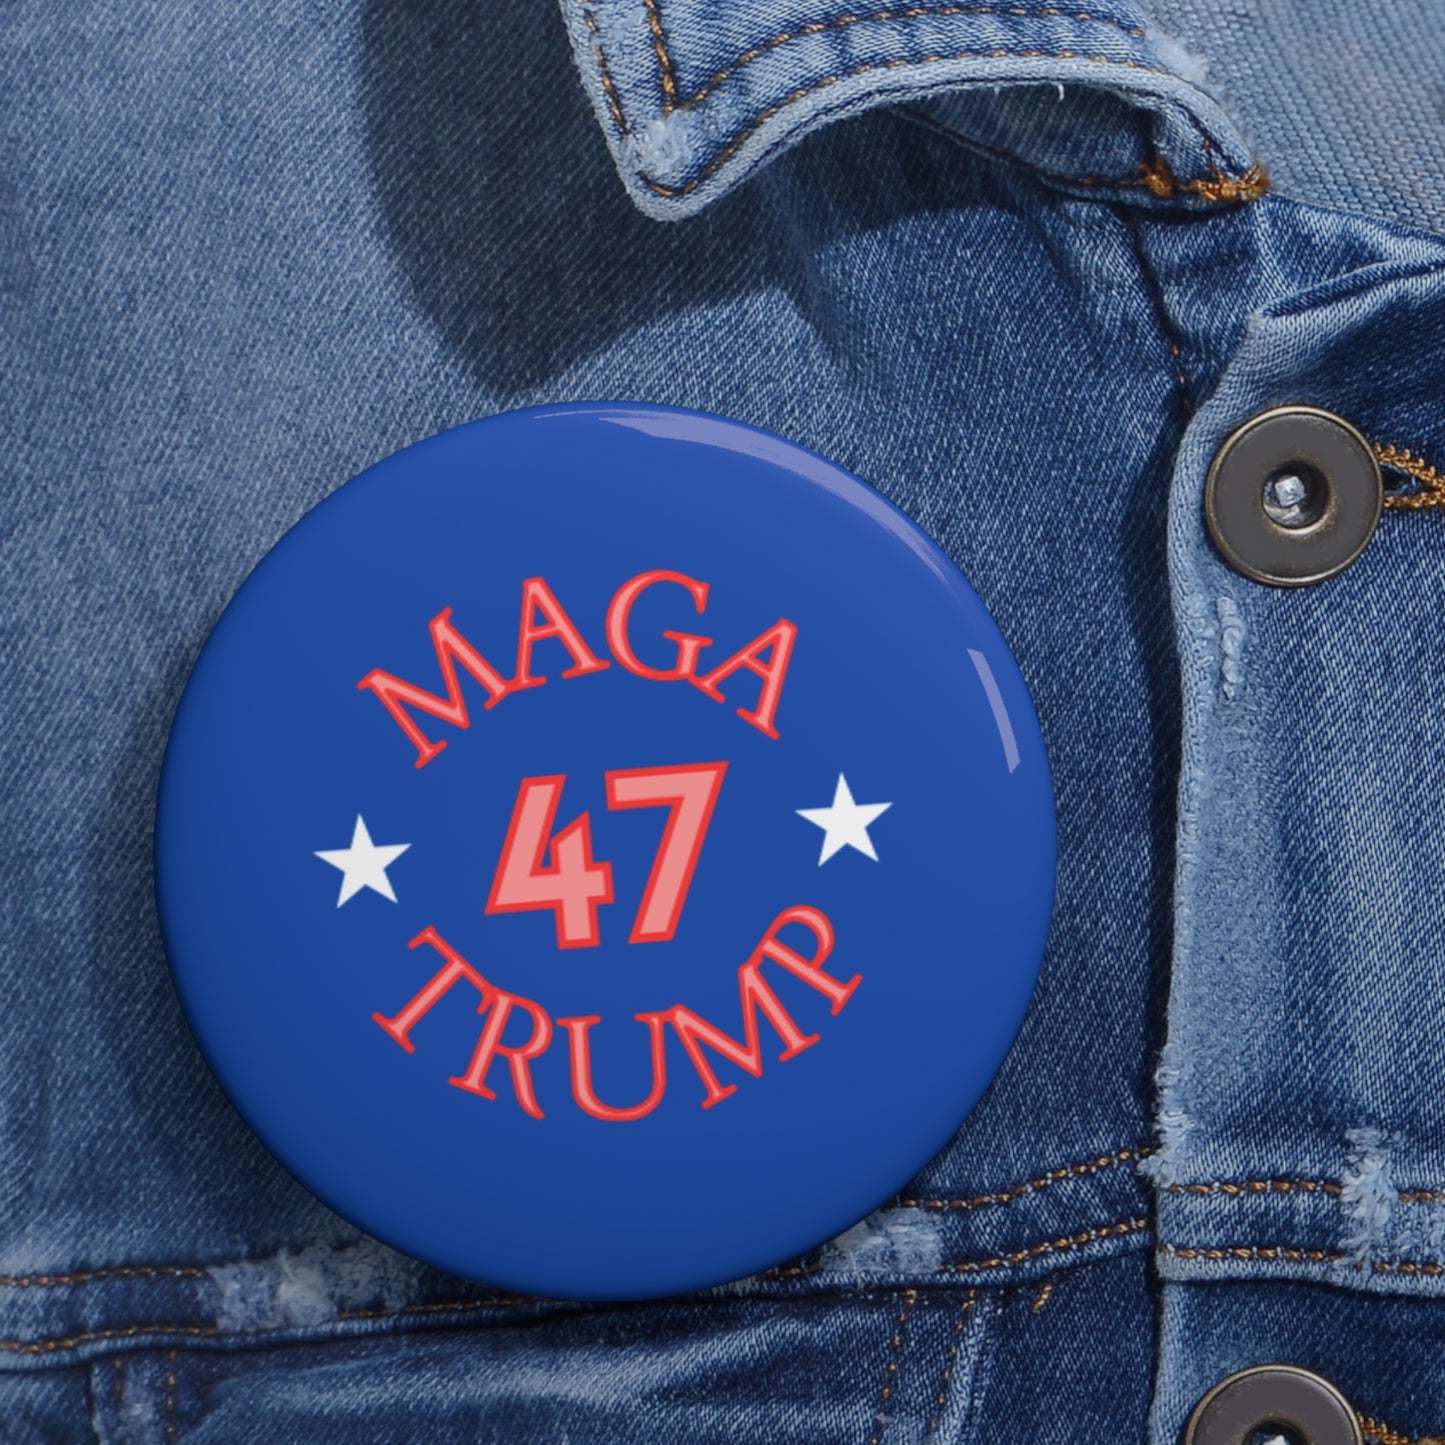 Trump Pin Buttons